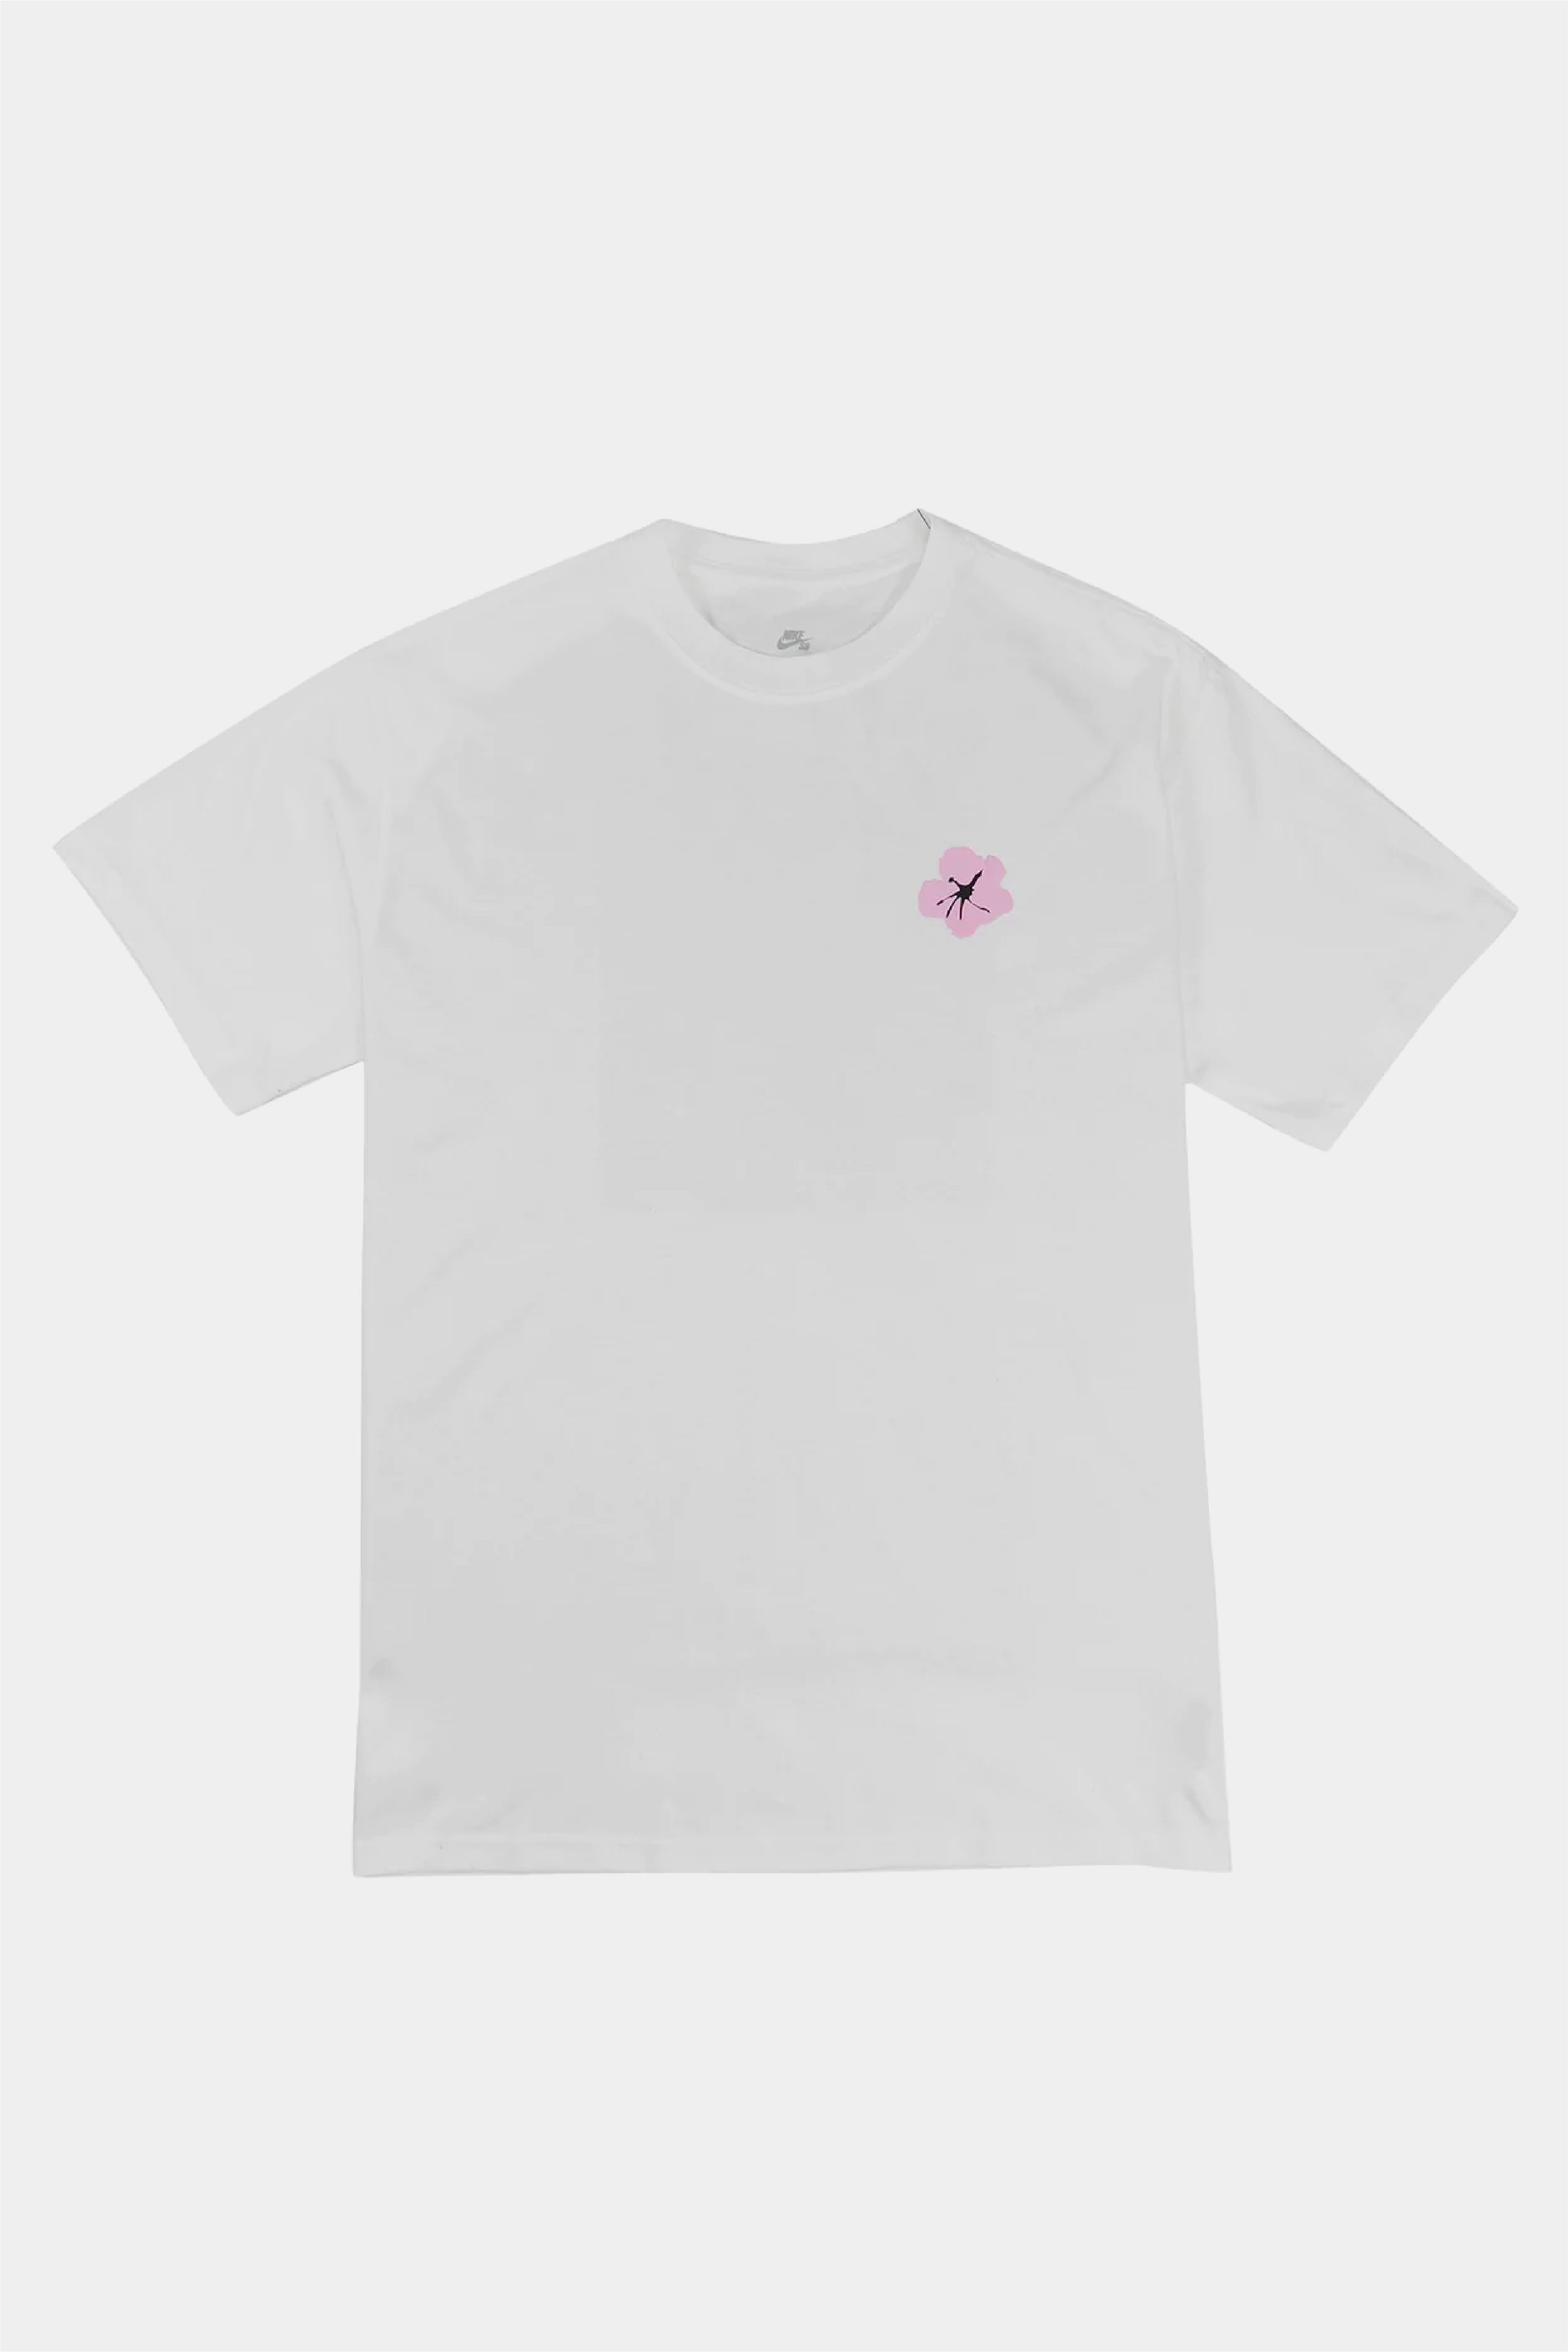 Selectshop FRAME - NIKE SB Natural Borders Tee T-Shirts Concept Store Dubai